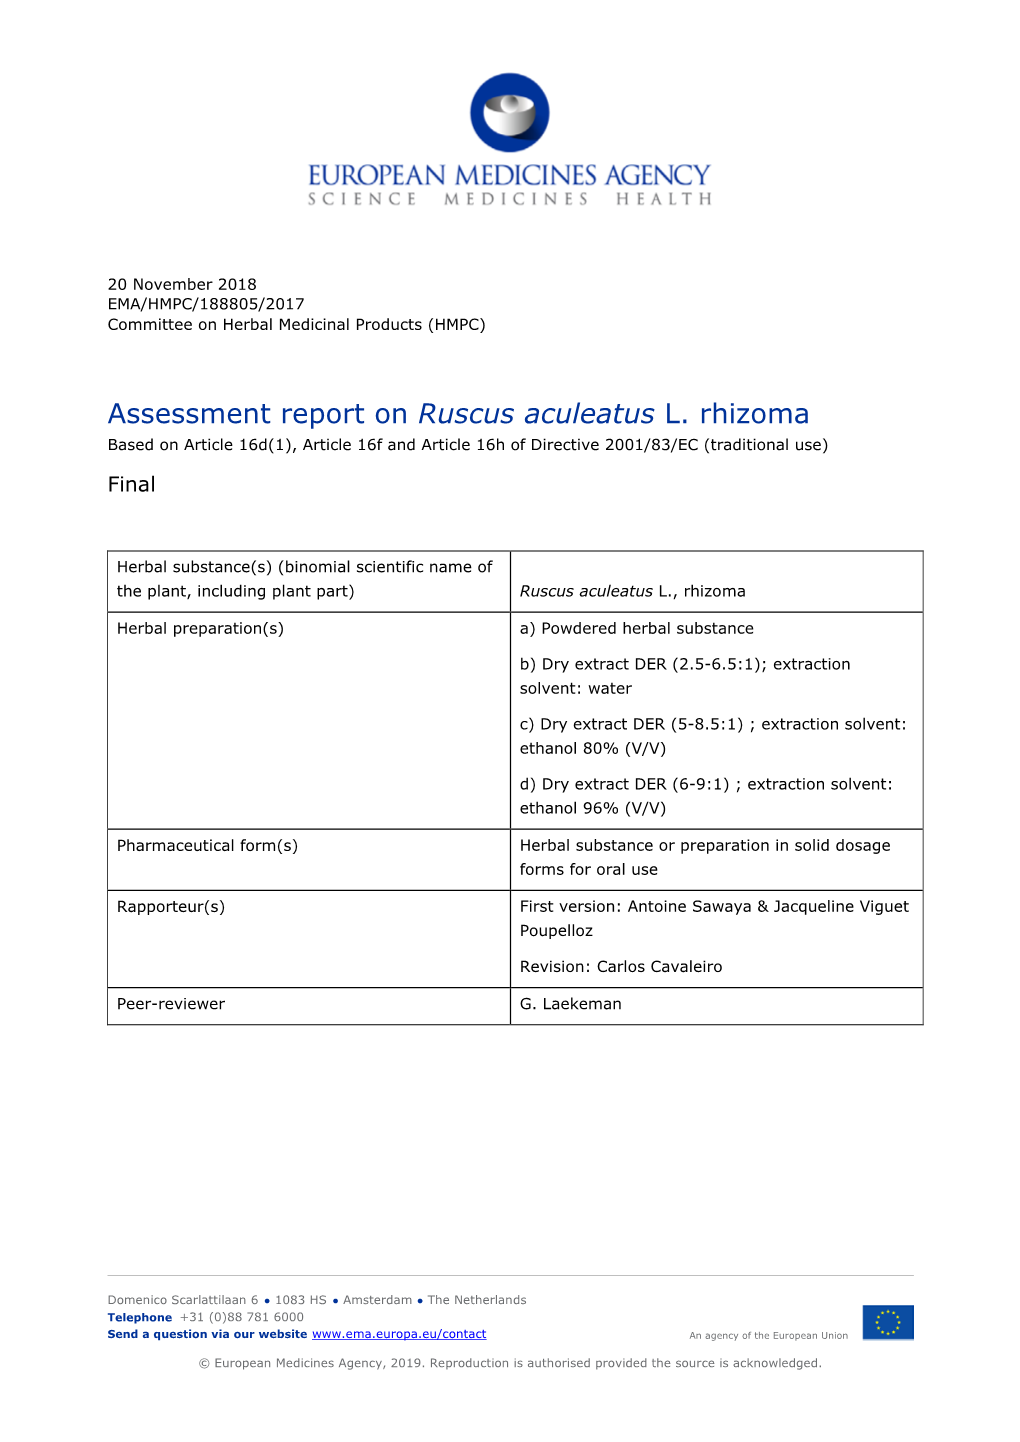 Assessment Report on Ruscus Aculeatus L. Rhizoma. Amsterdam